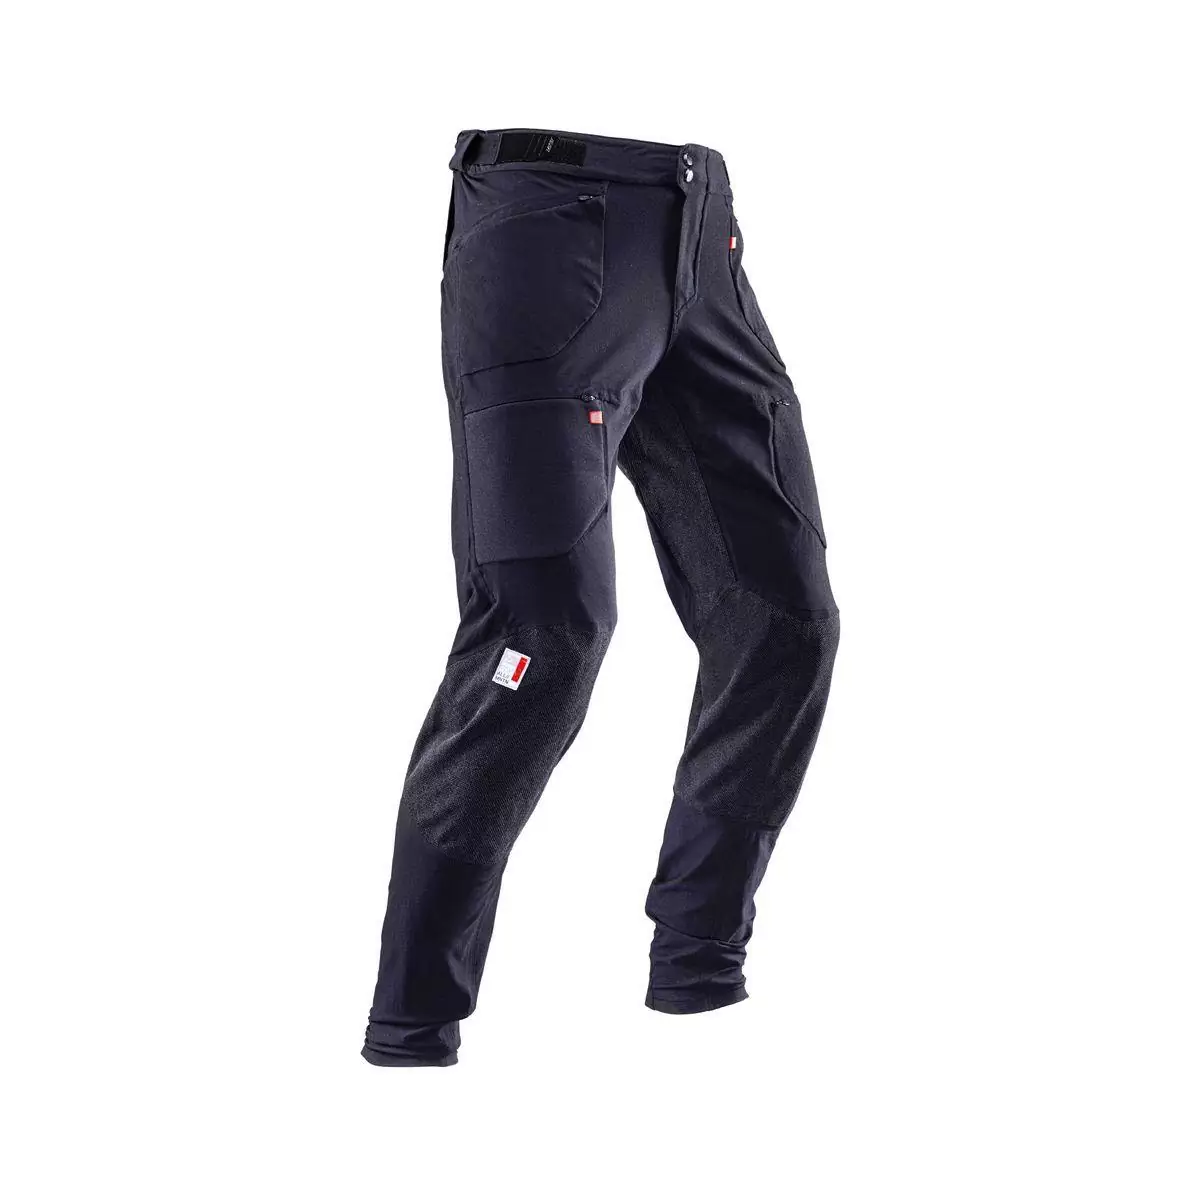 Allmtn 4.0 Long MTB Pants Black Size L #2